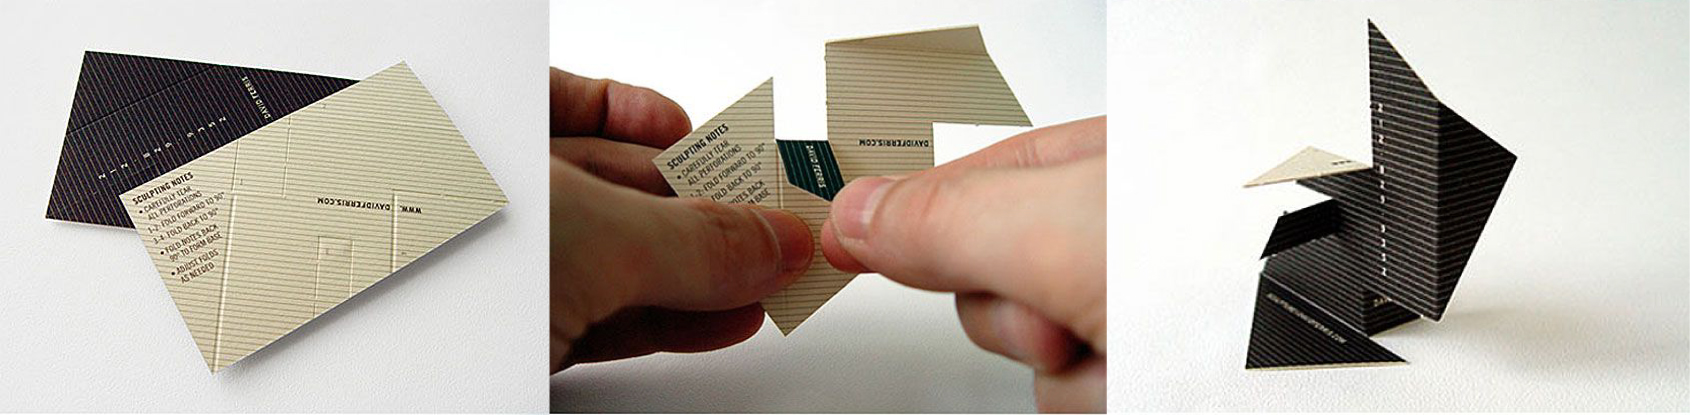 carte de visite qui se transforme en origami